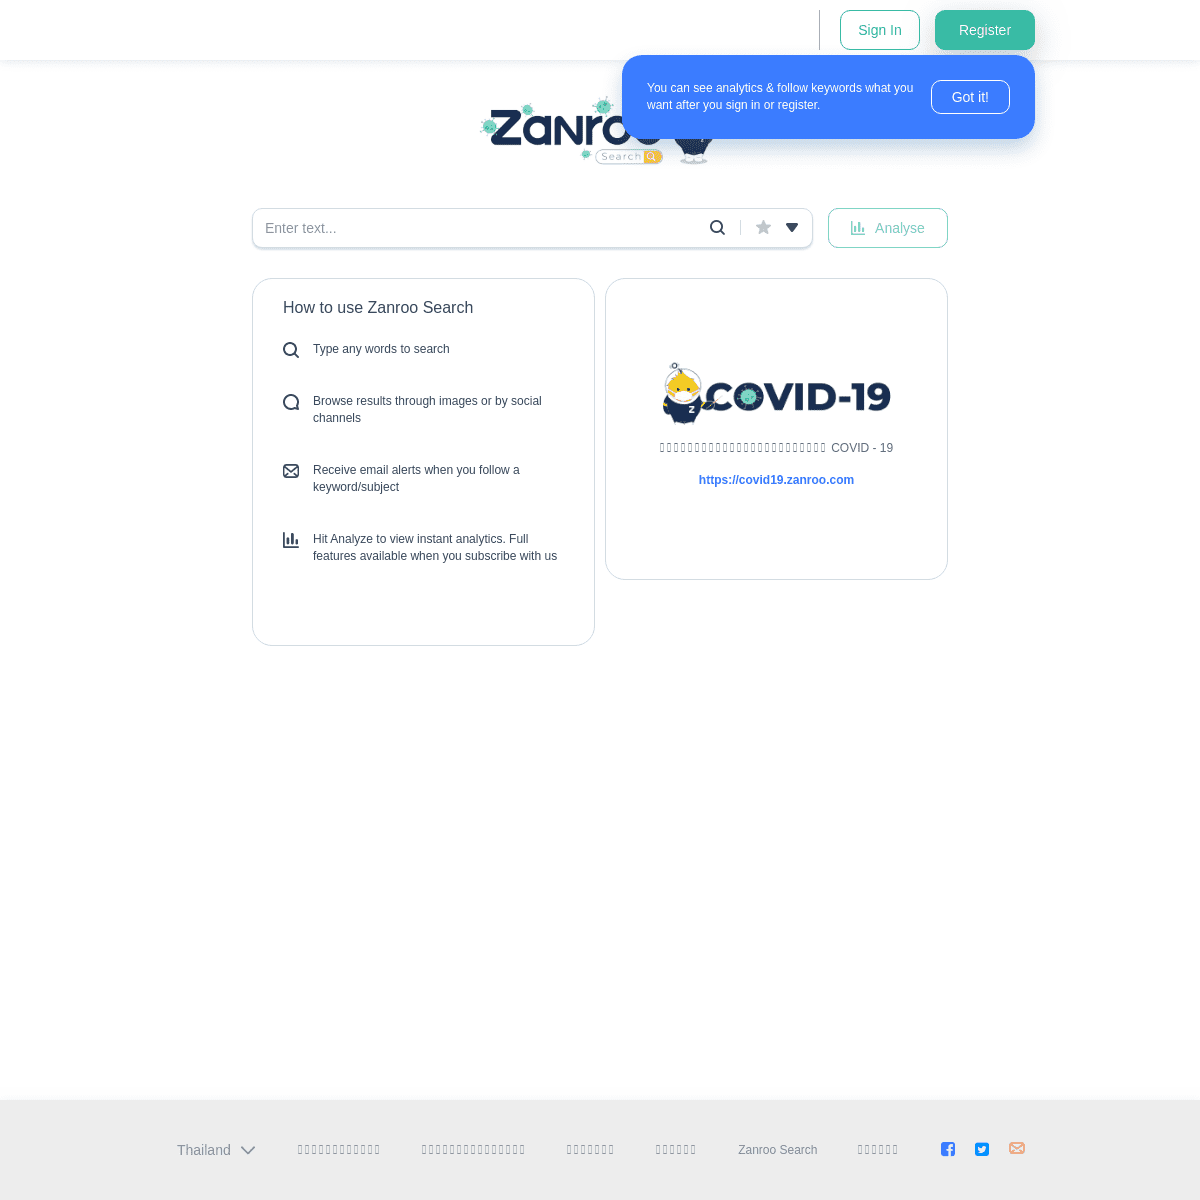 A complete backup of zanroo.com